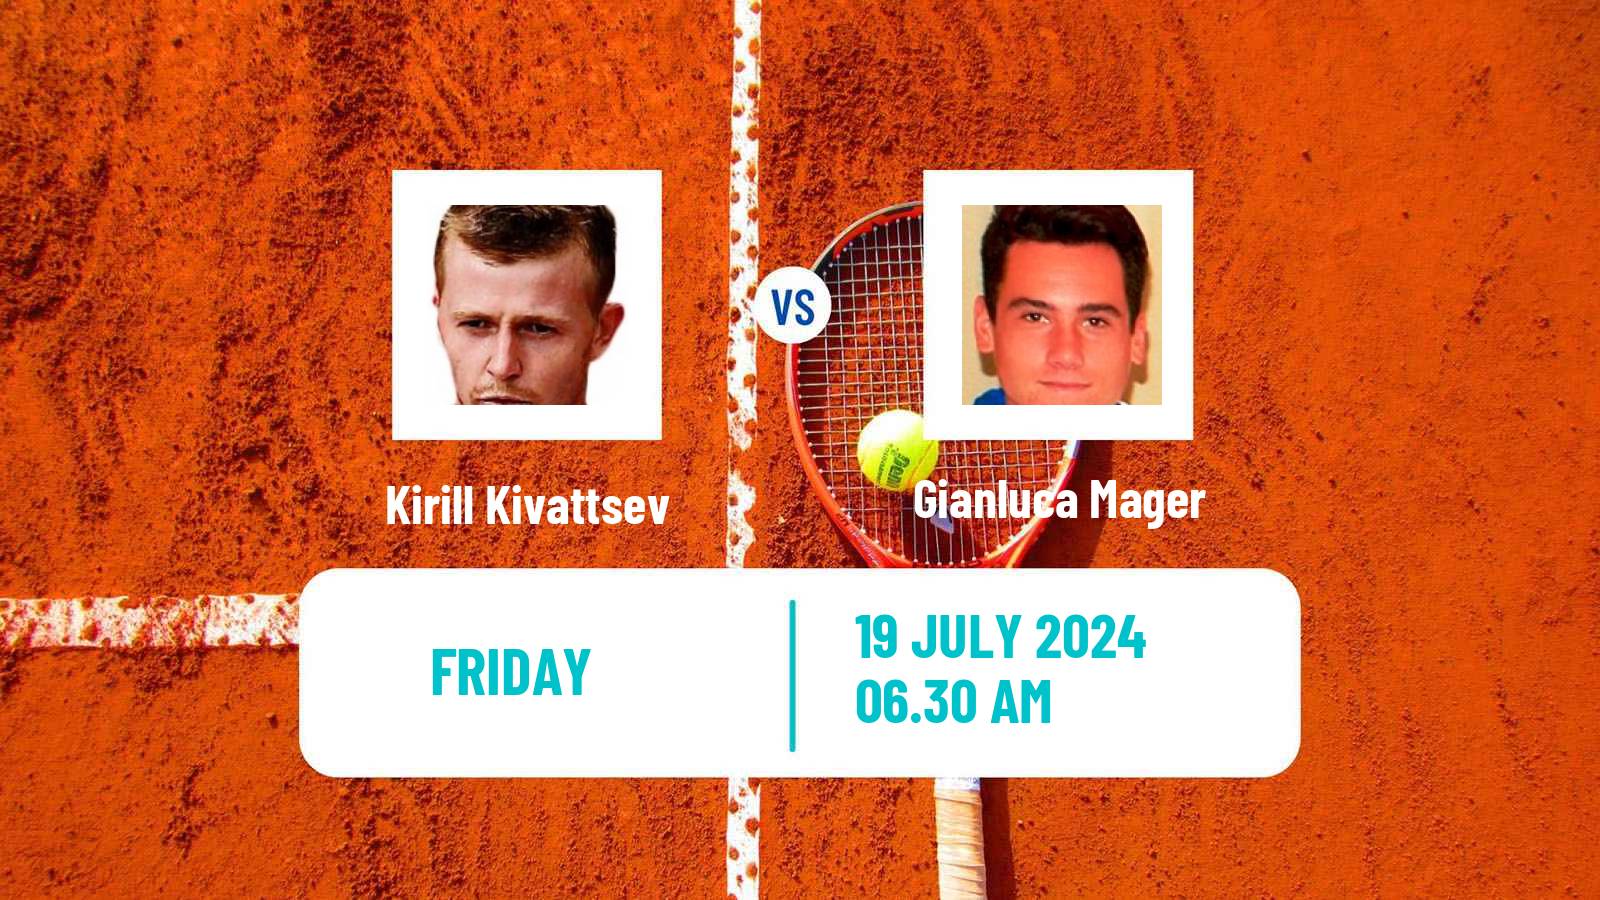 Tennis ITF M25 Telfs Men Kirill Kivattsev - Gianluca Mager